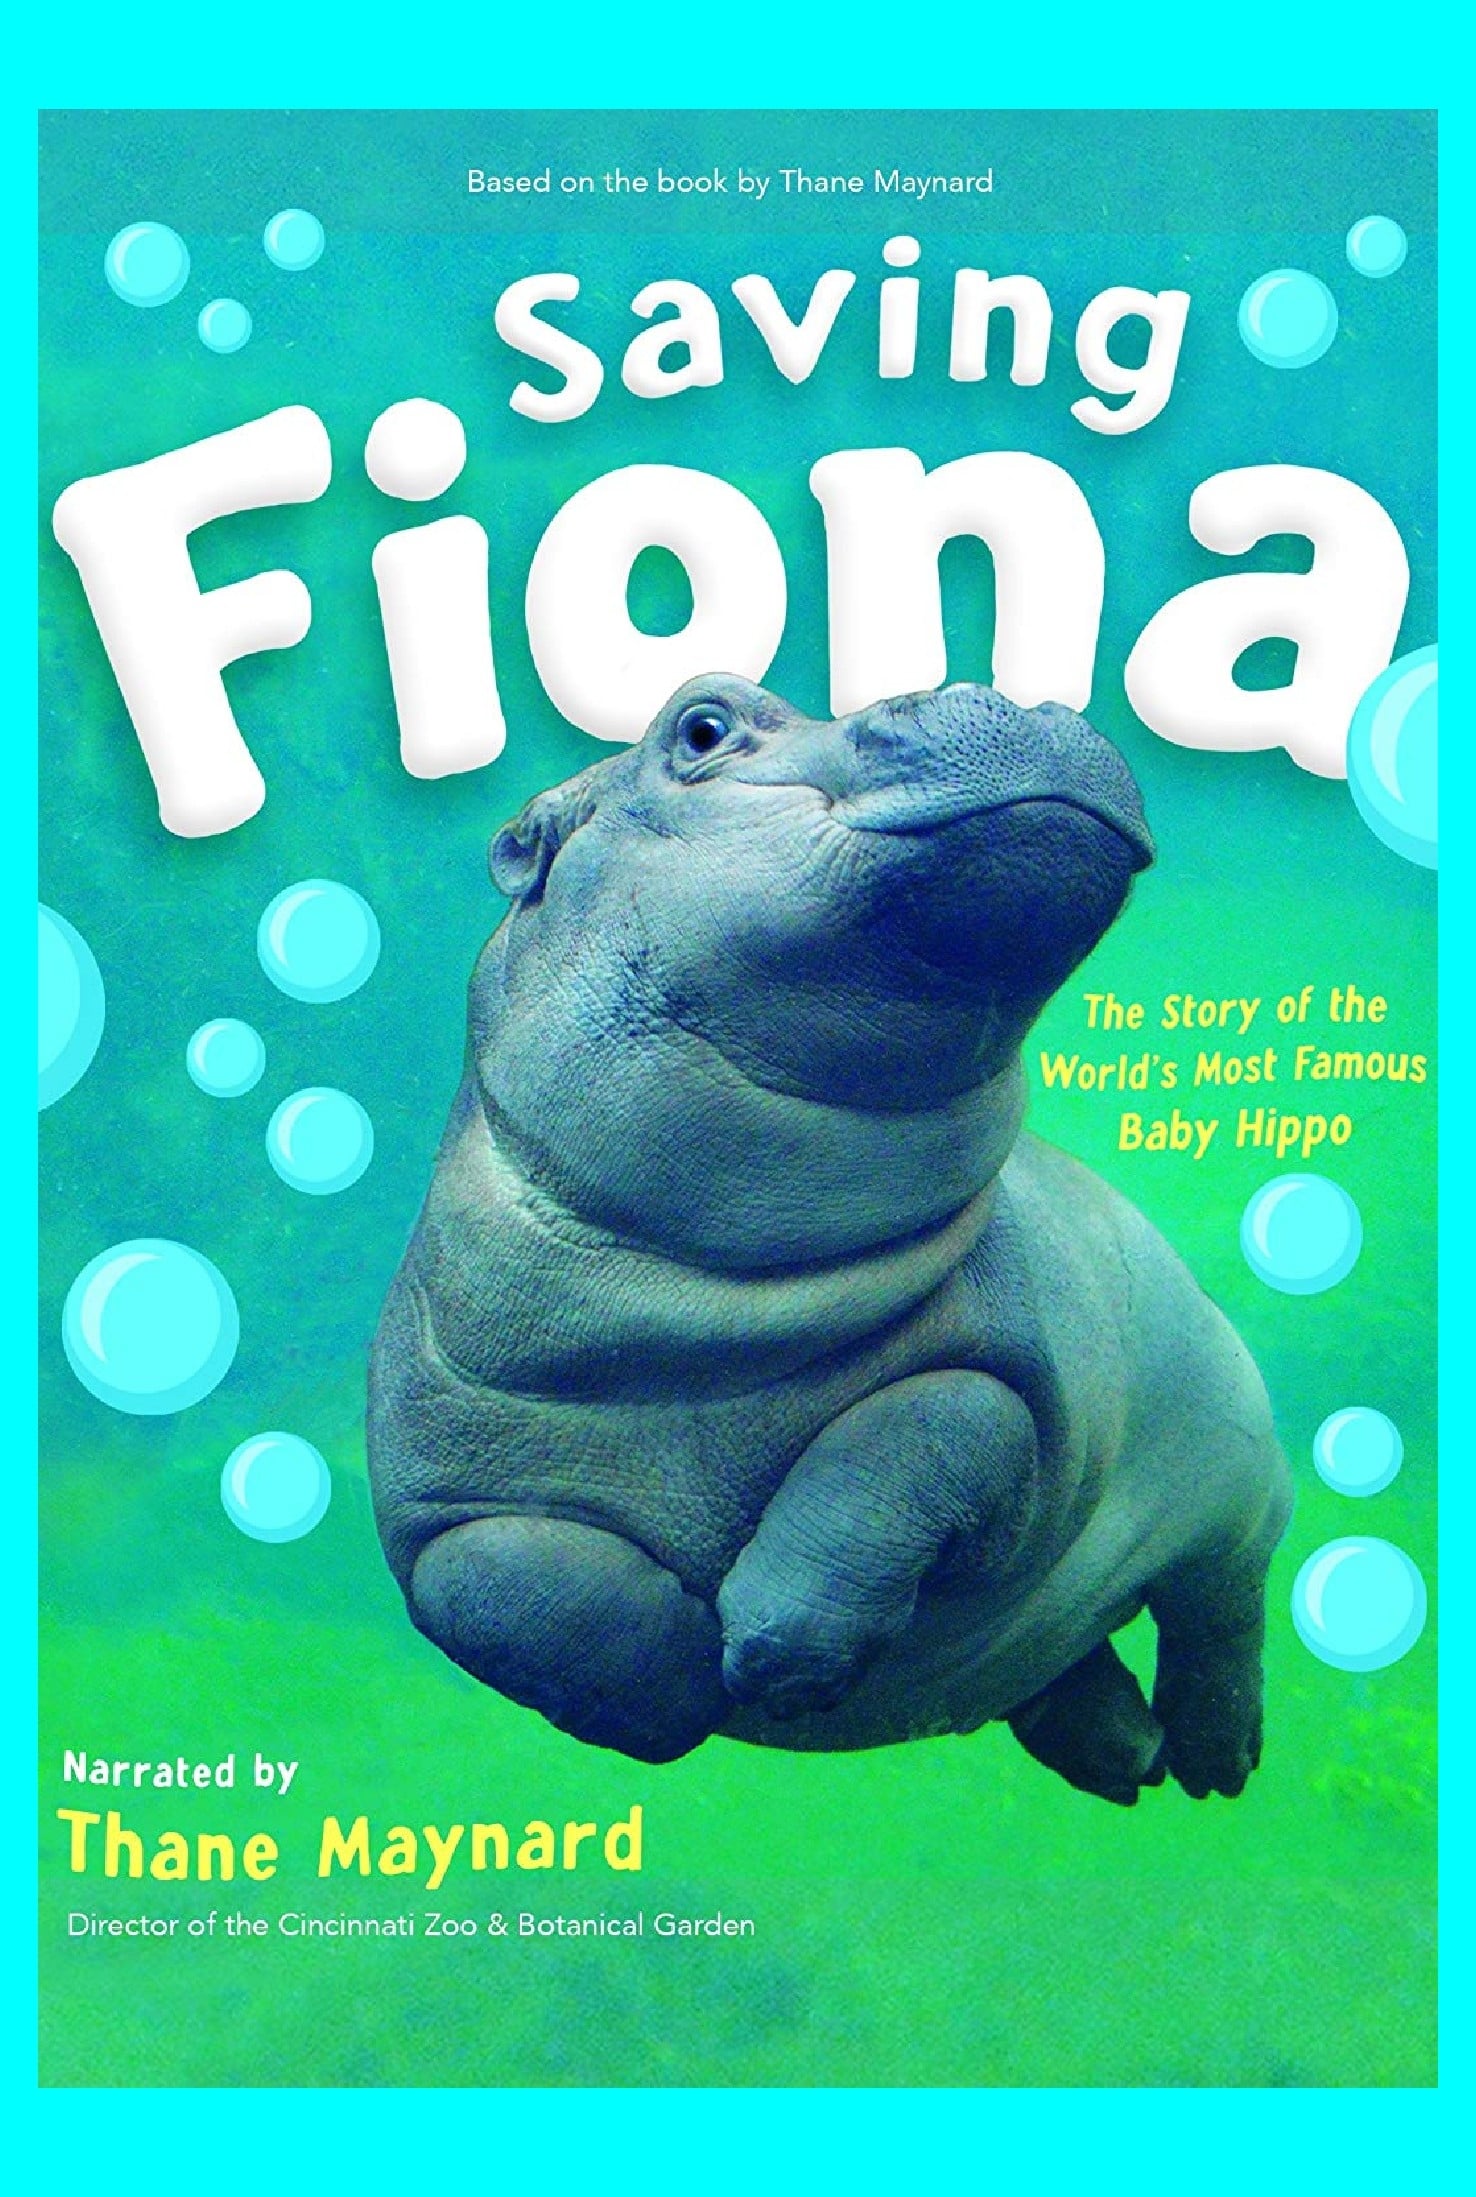 Saving Fiona